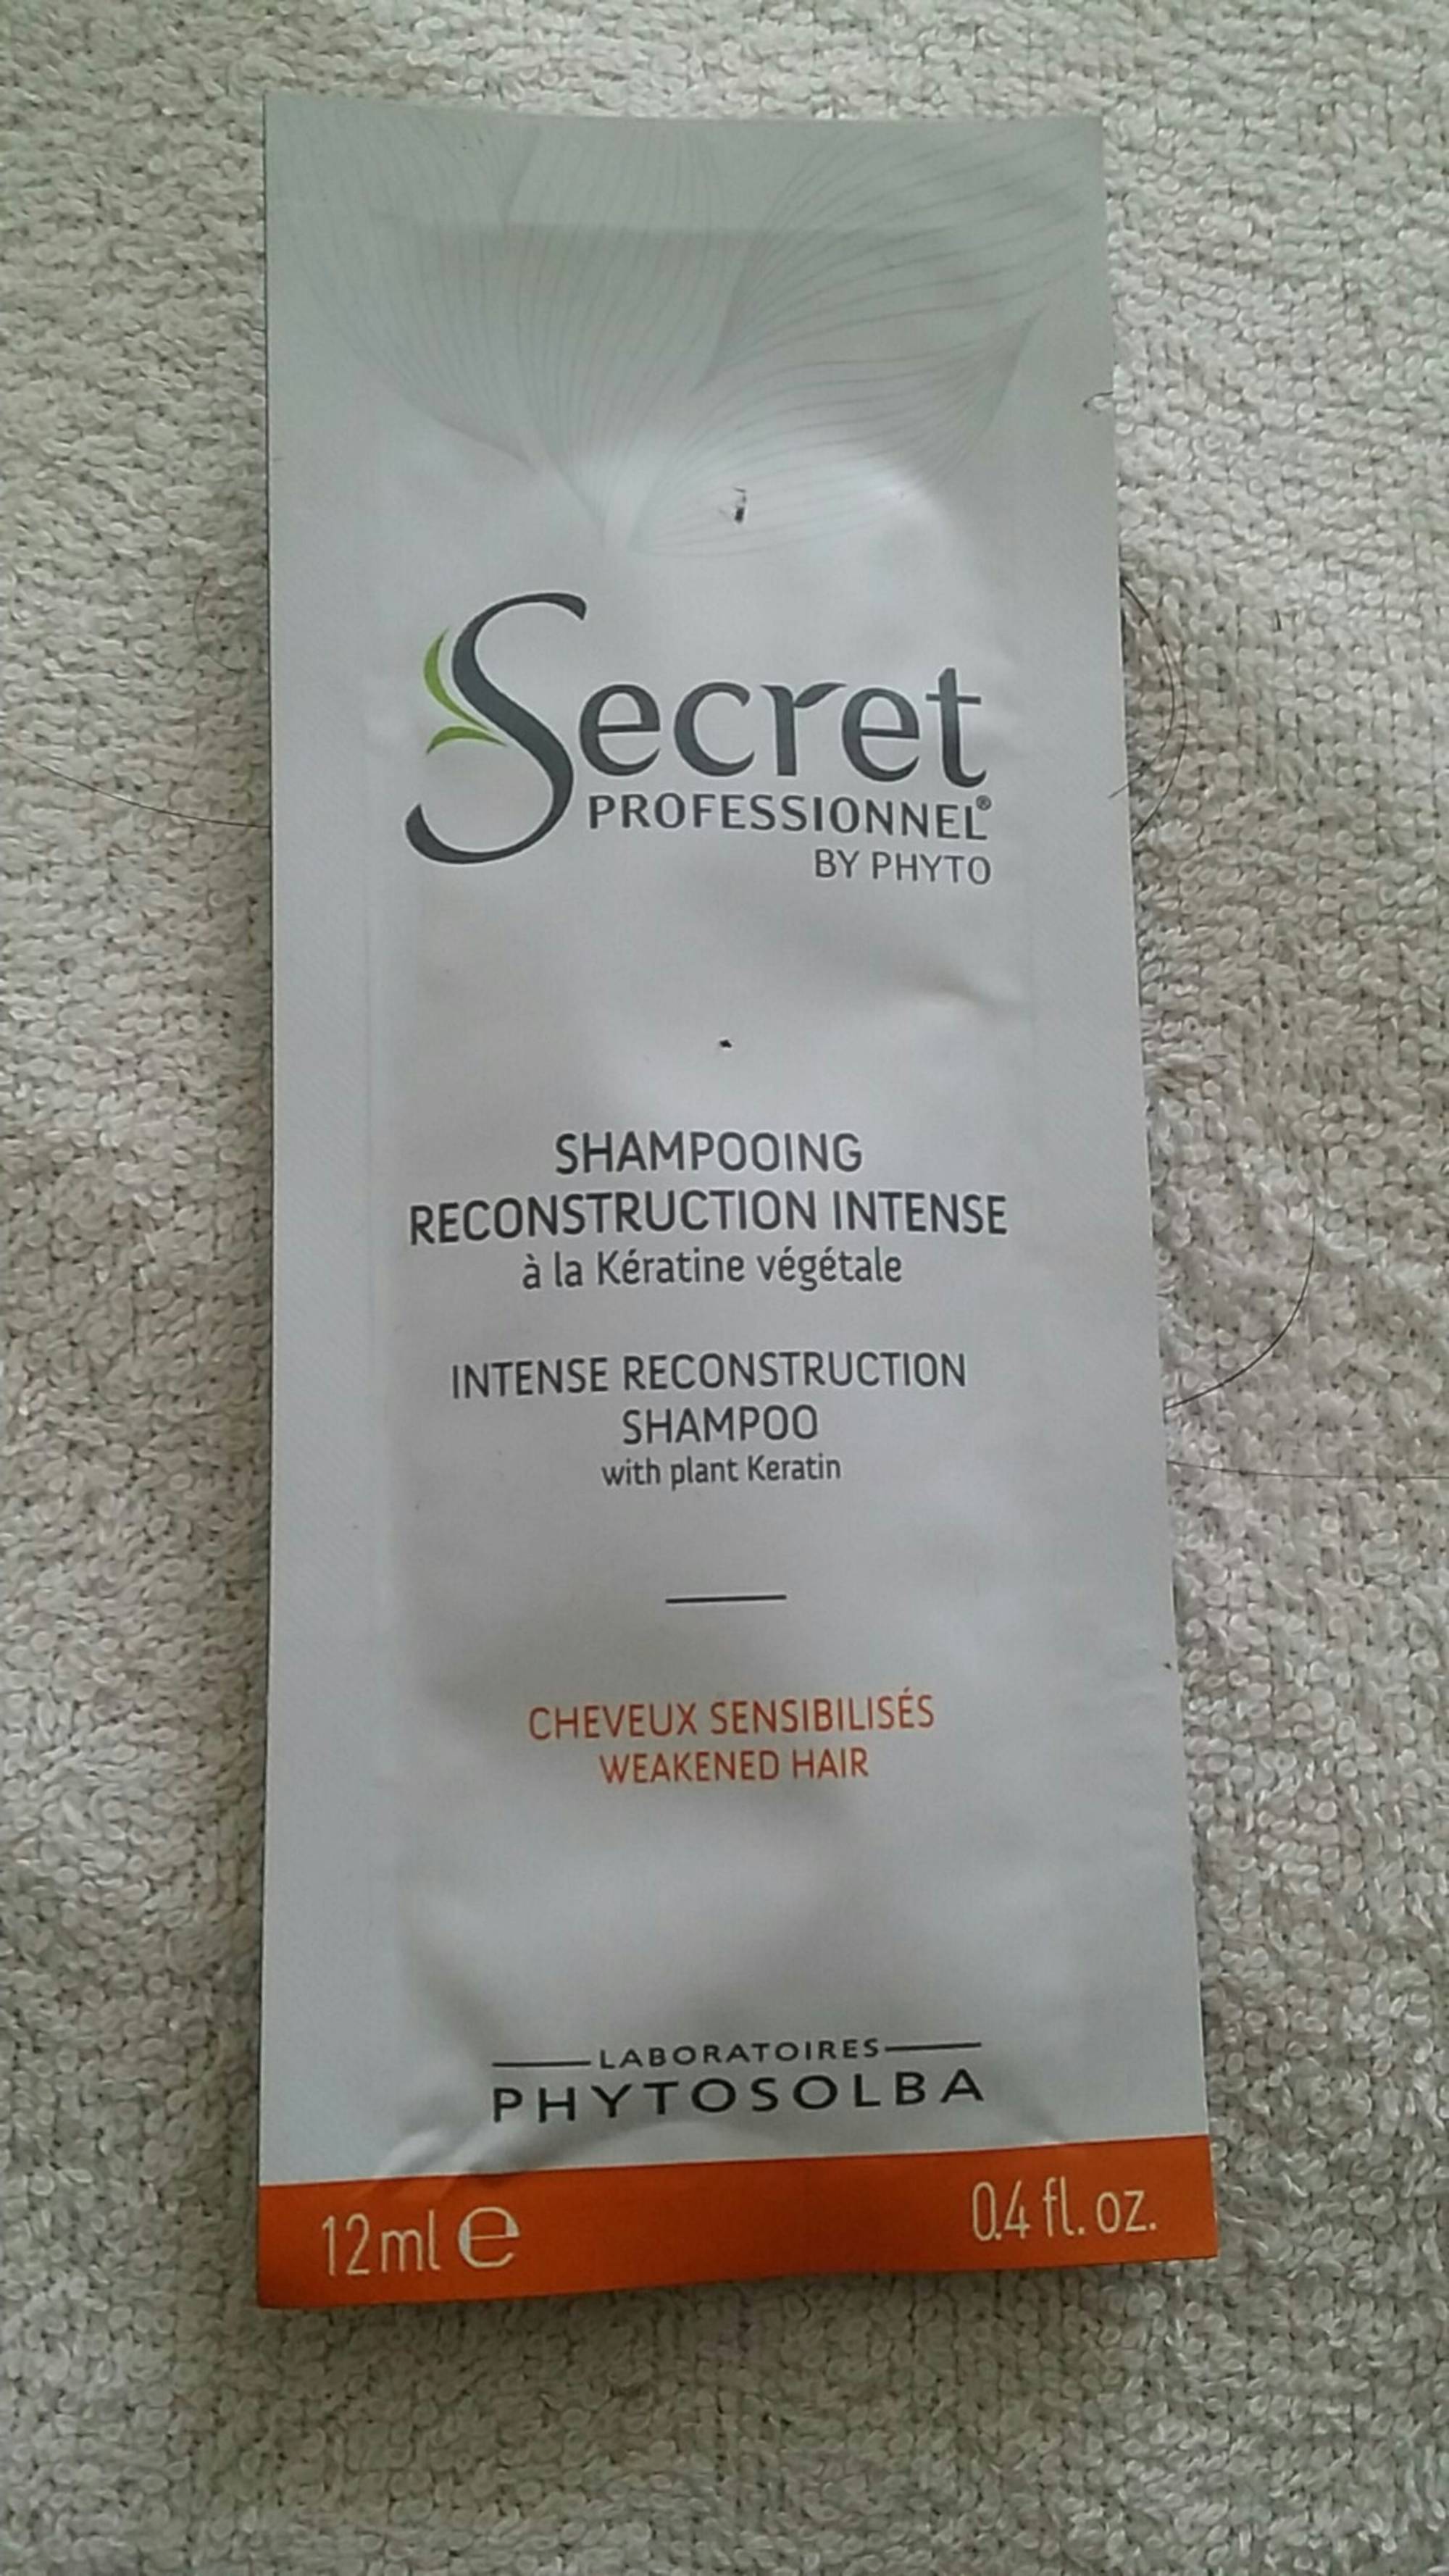 PHYTO - Secret professionnel - Shampooing reconstruction intense